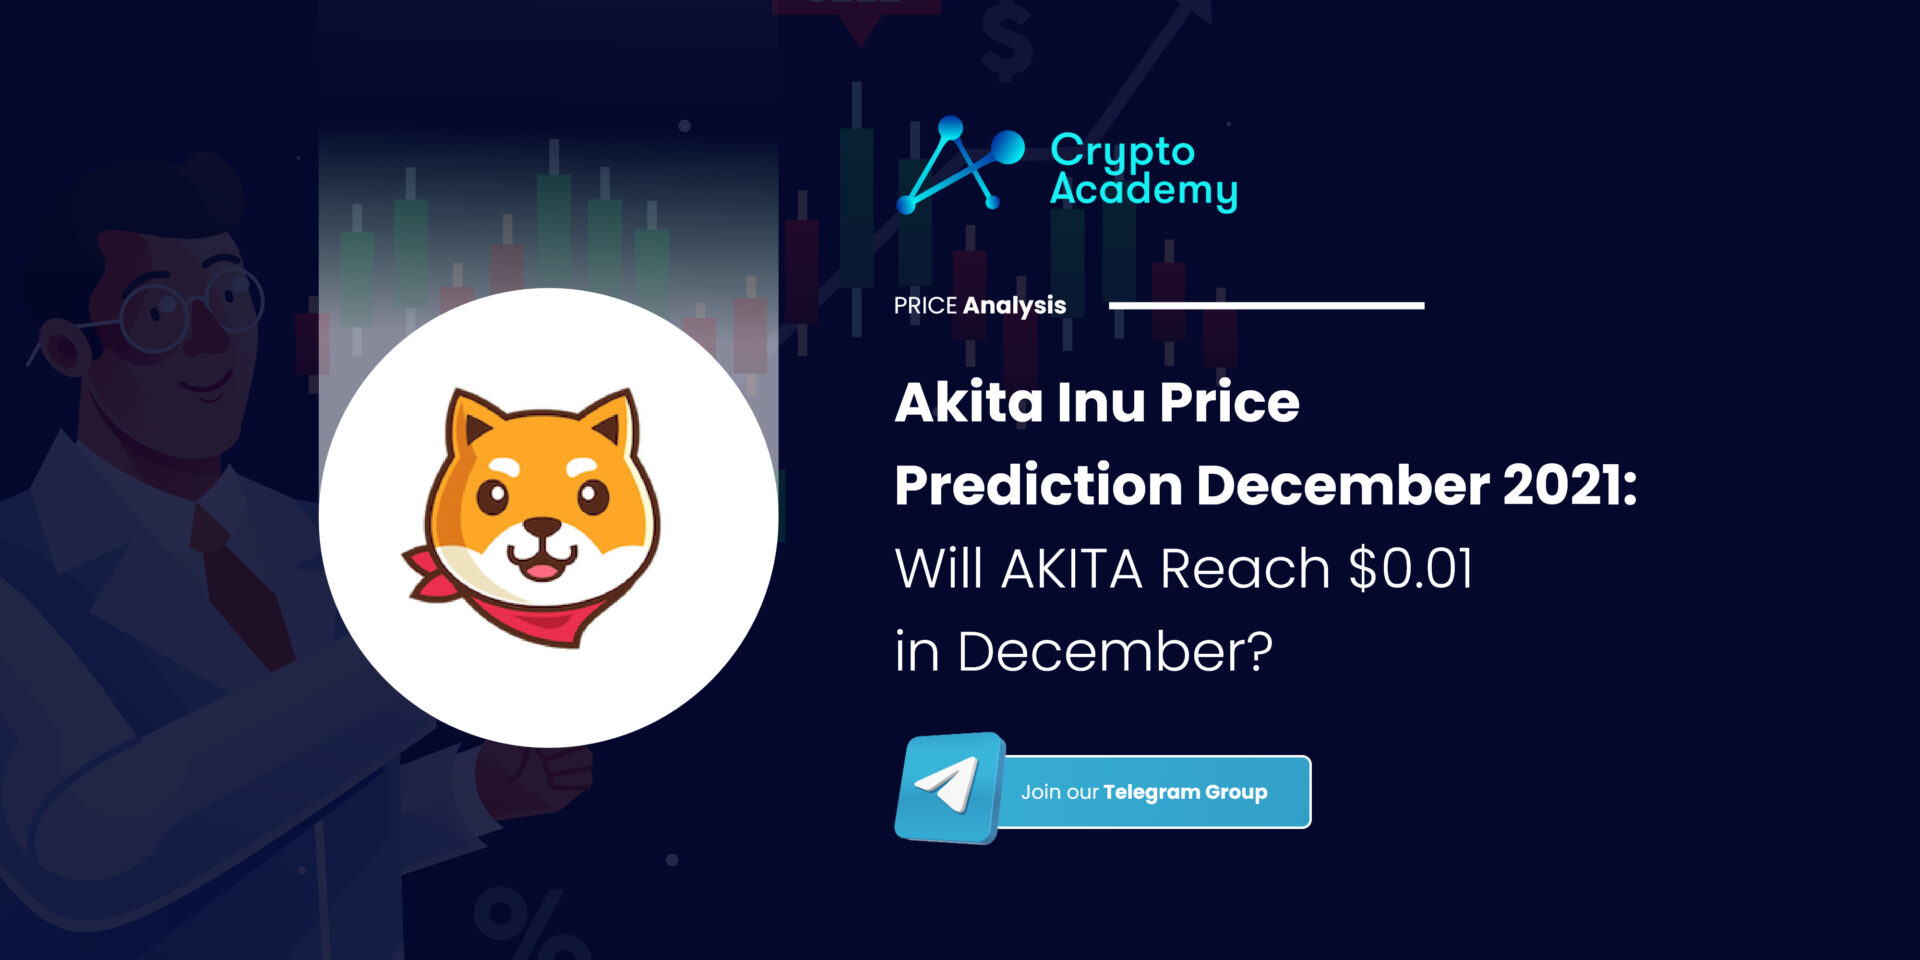 Akita Inu Price Prediction December 2021: Will AKITA Reach $0.01 in December?